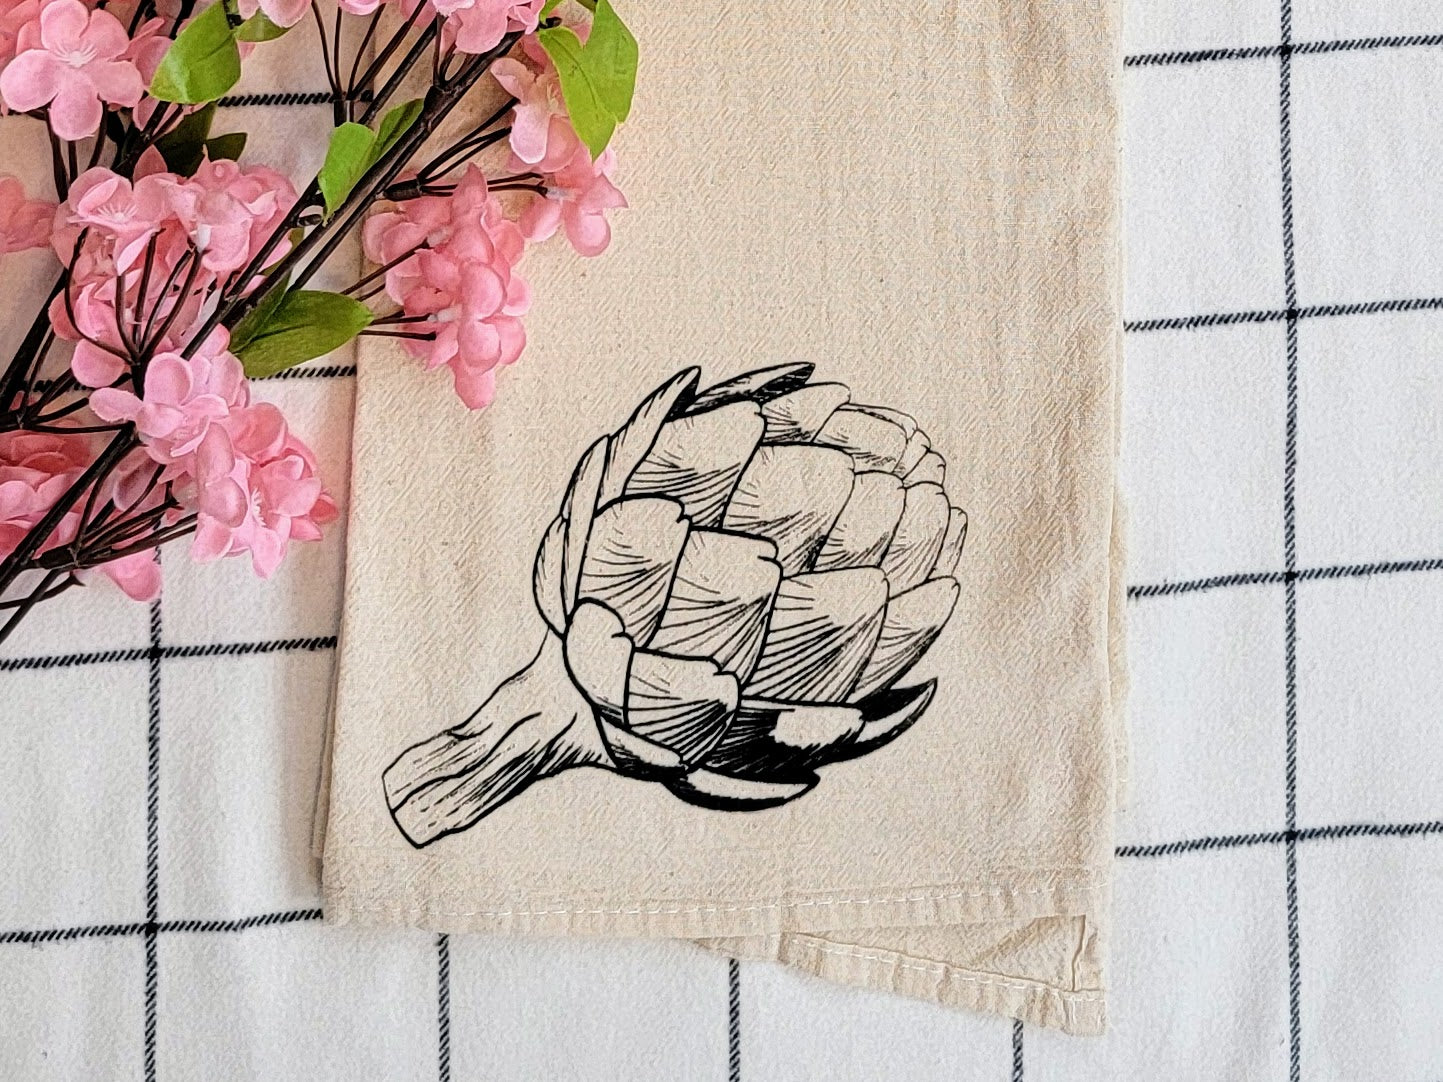 Artichoke Screen Printed Tea Towel - Lanscape Close Up Shot